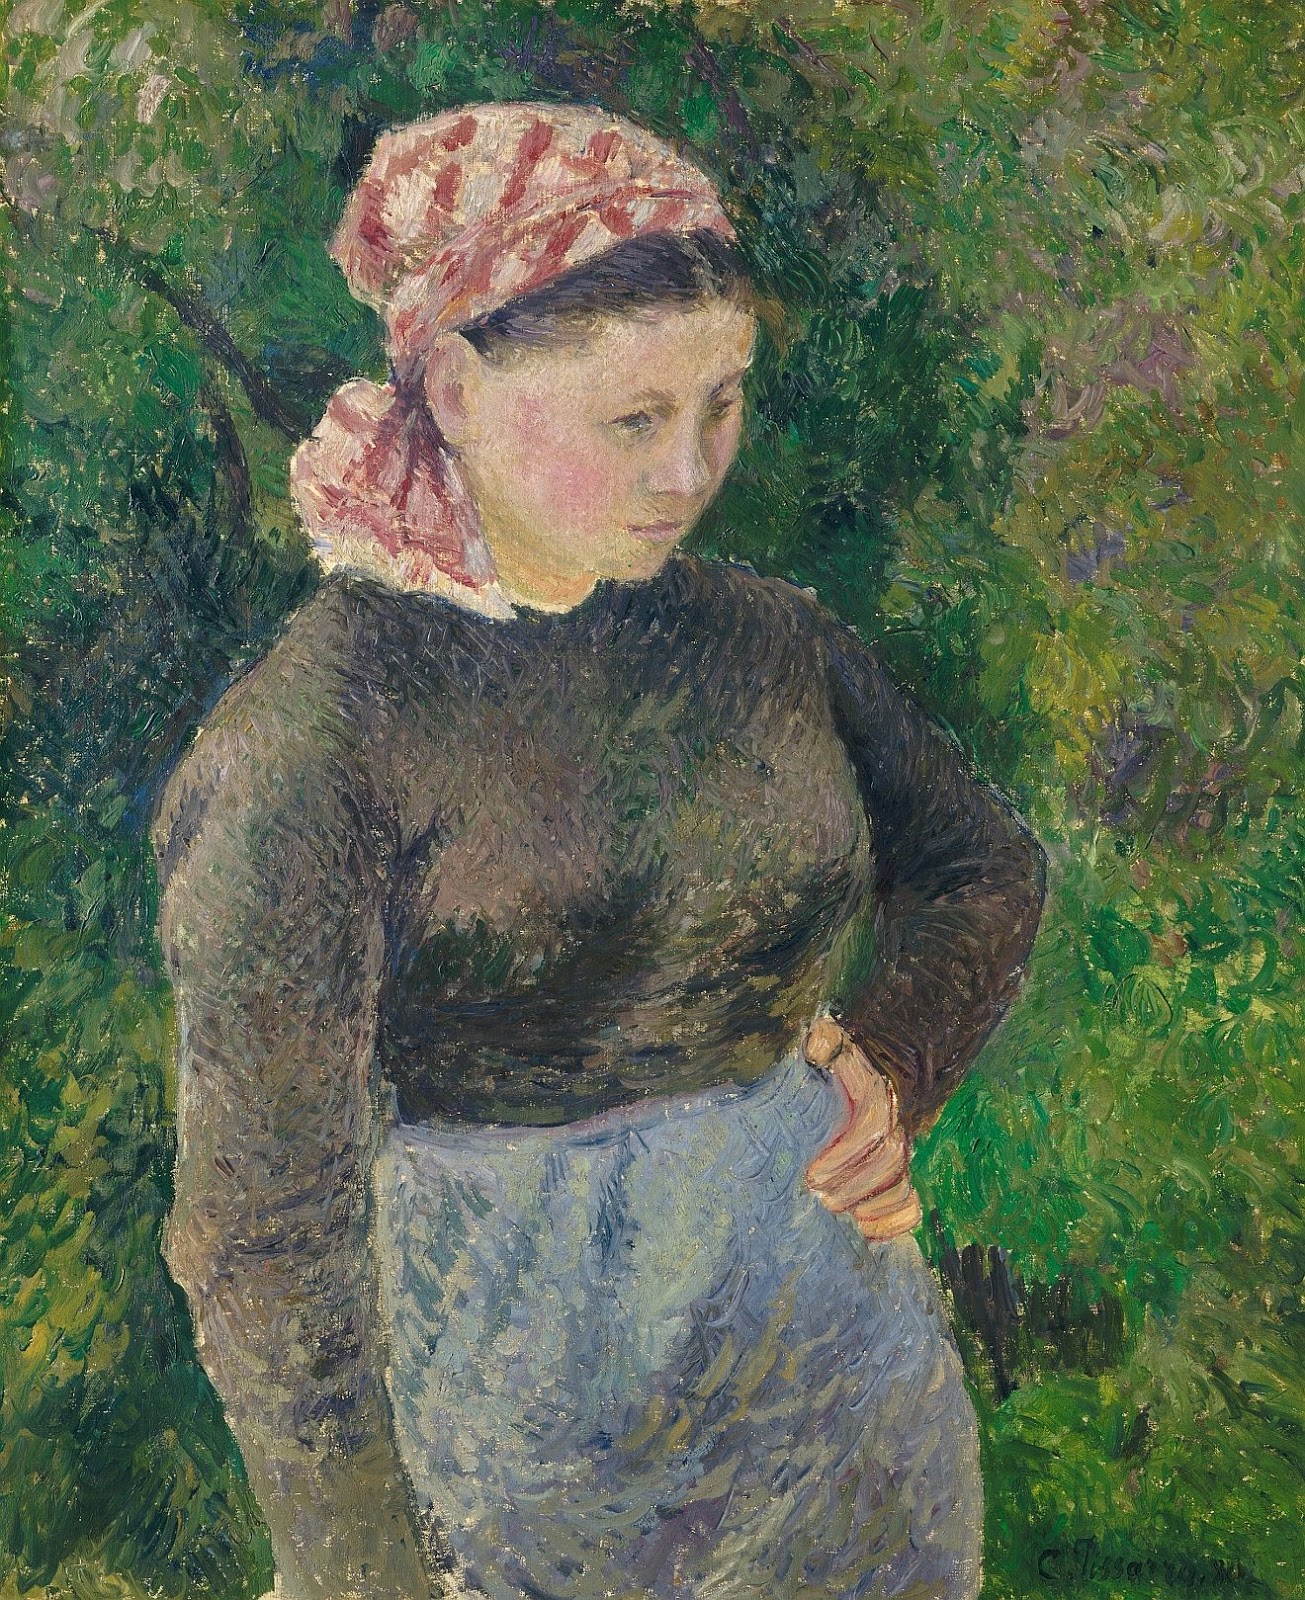 Camille+Pissarro-1830-1903 (349).jpg